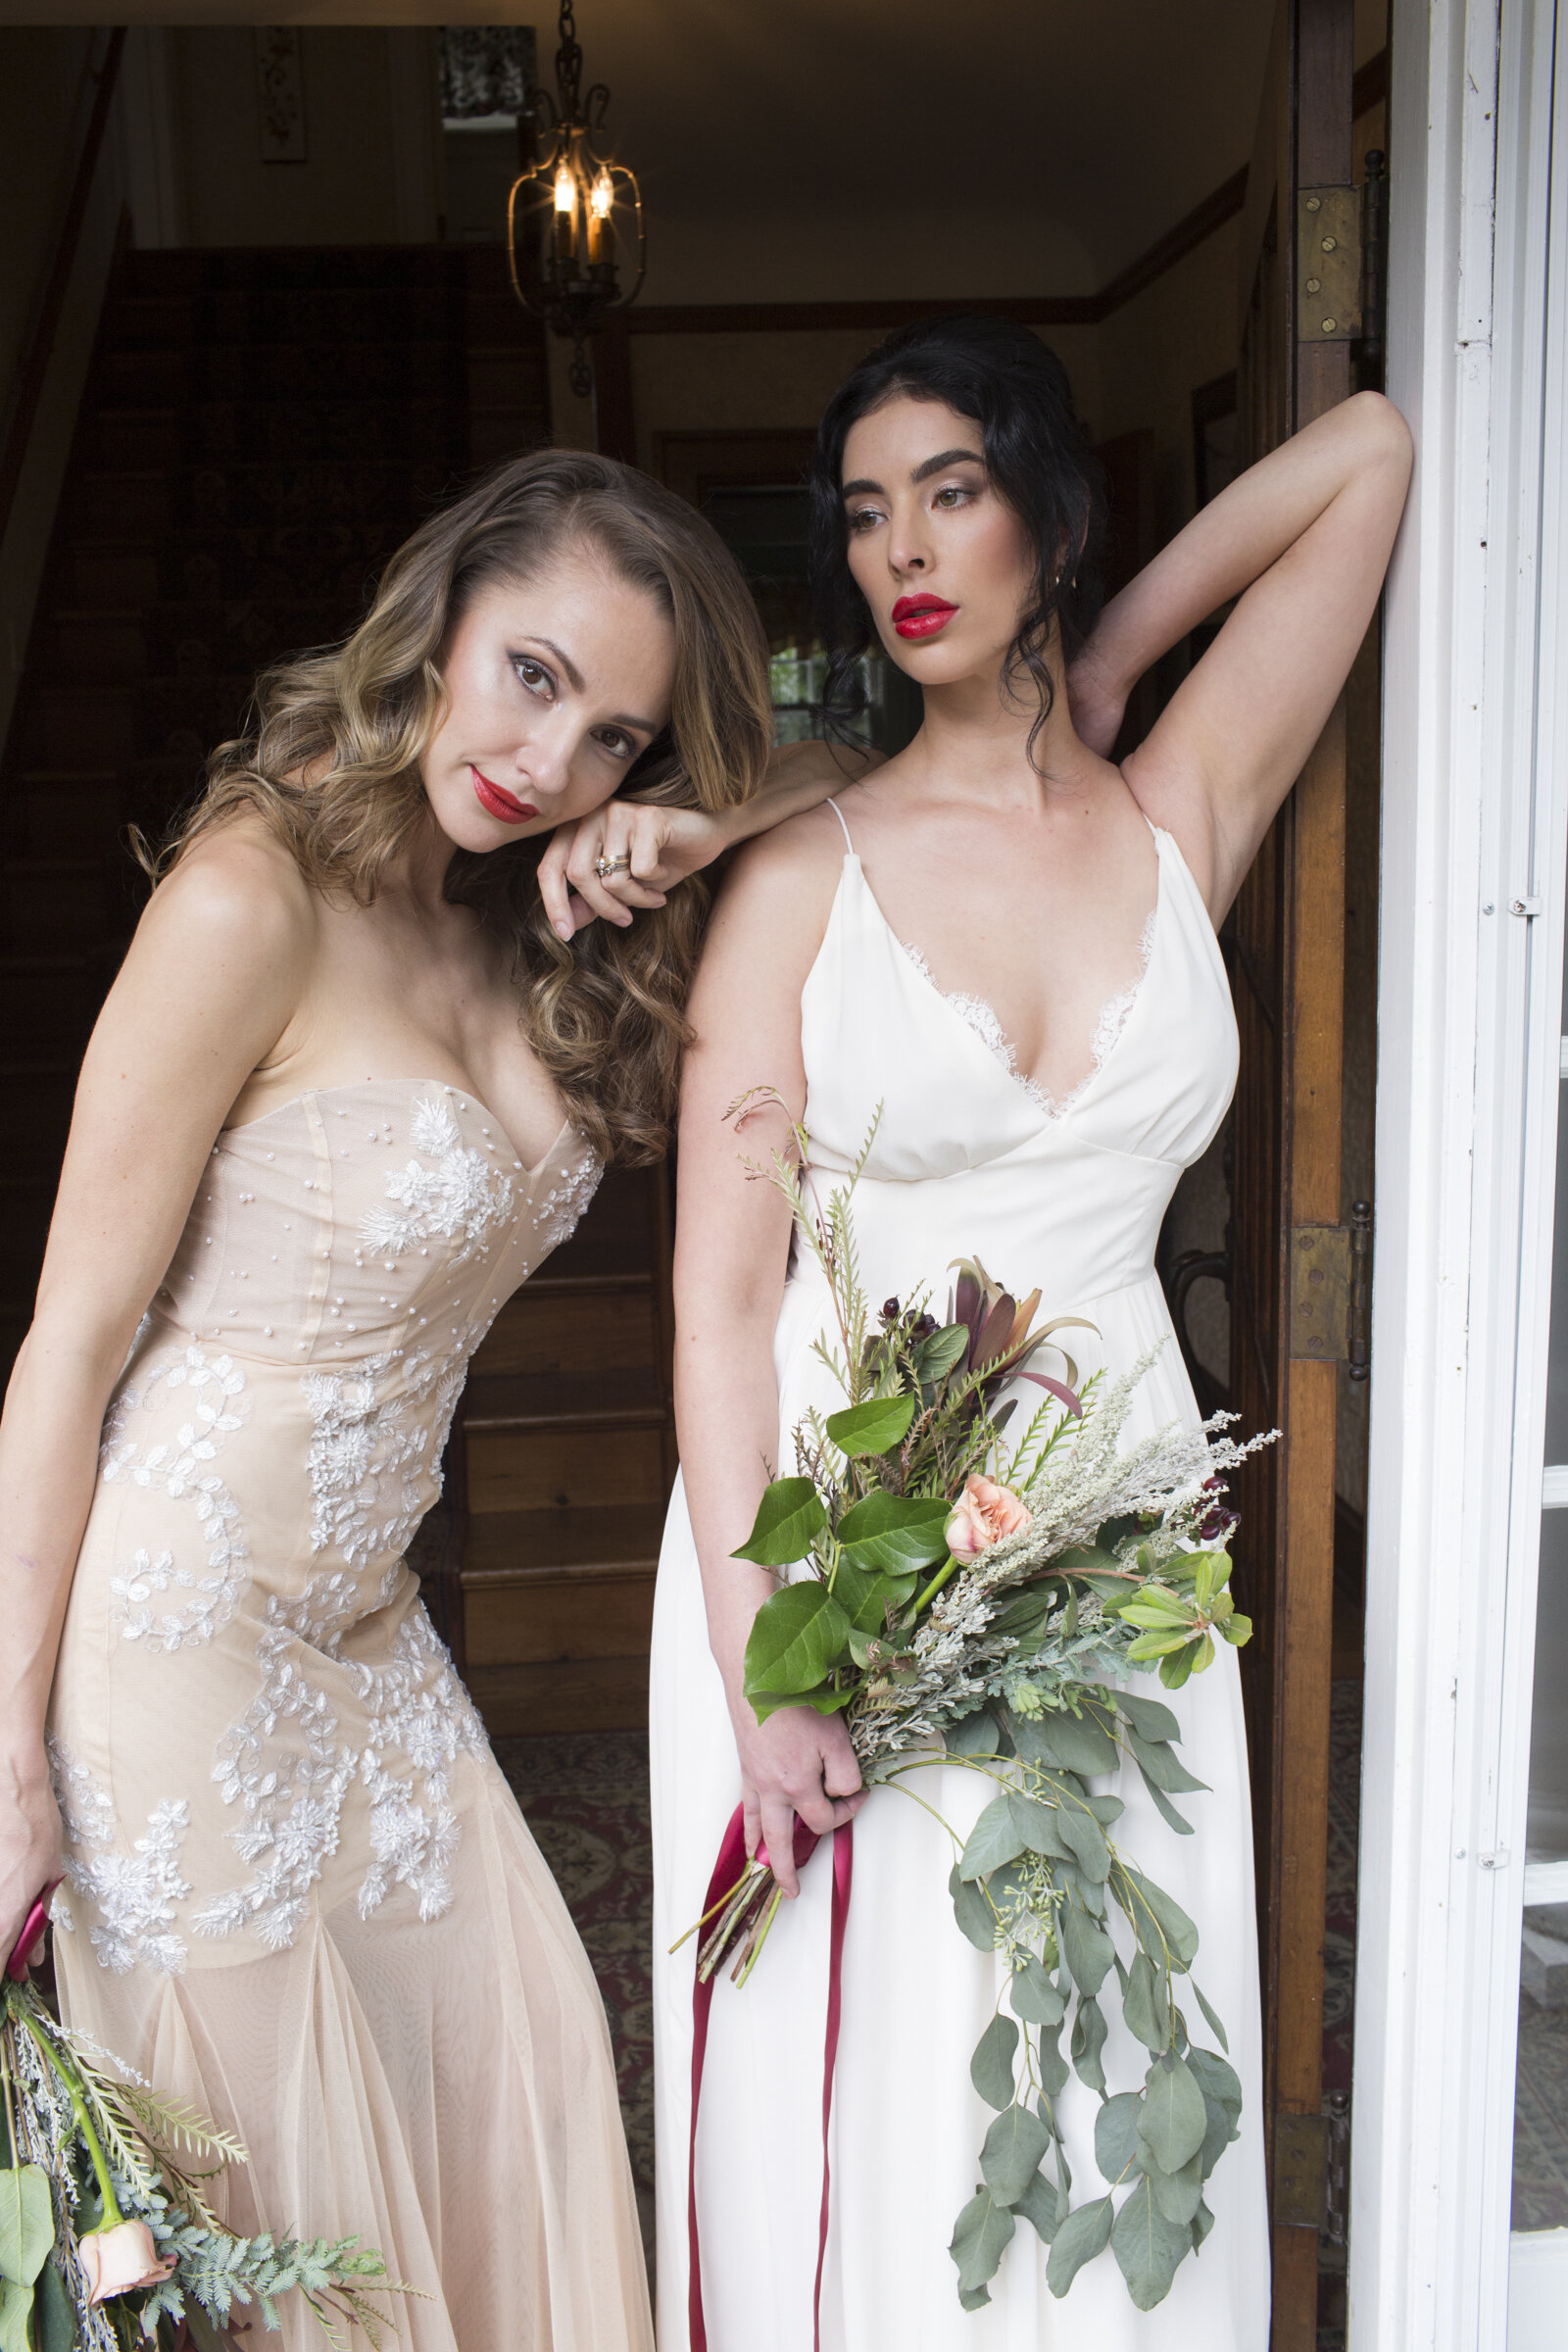 Two wedding dresses